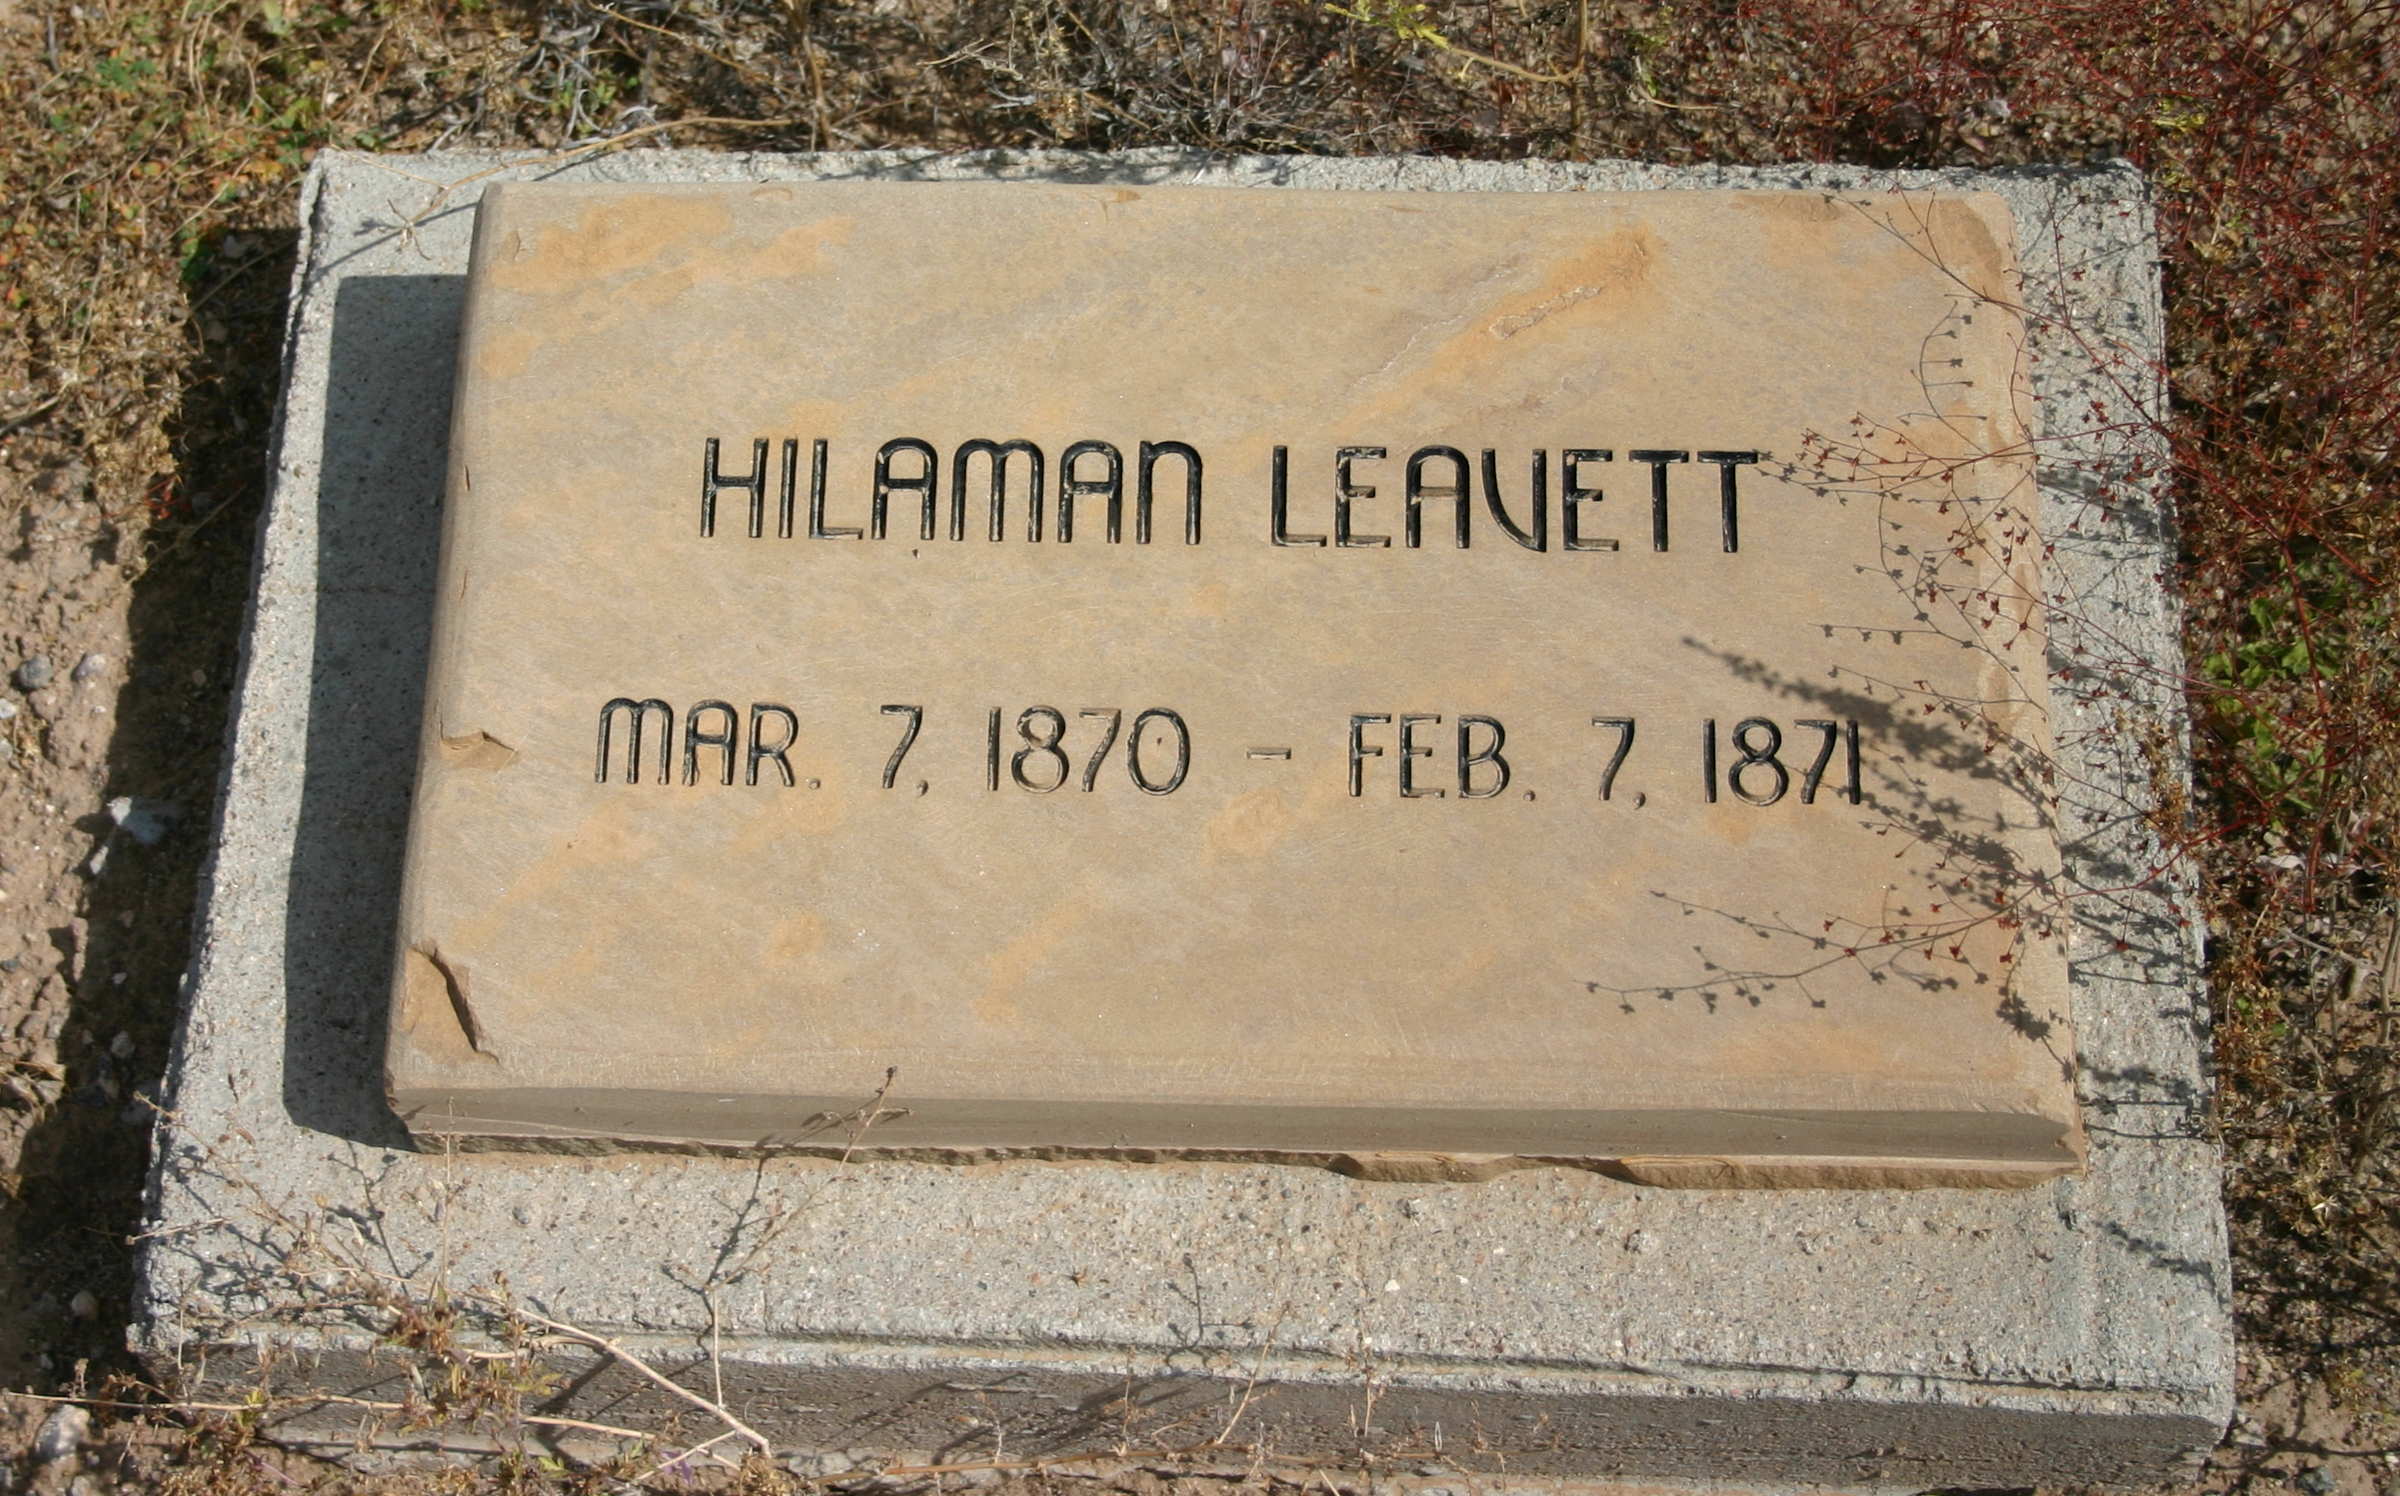 Hilaman Leavett gravestone at the Hebron Cemetery